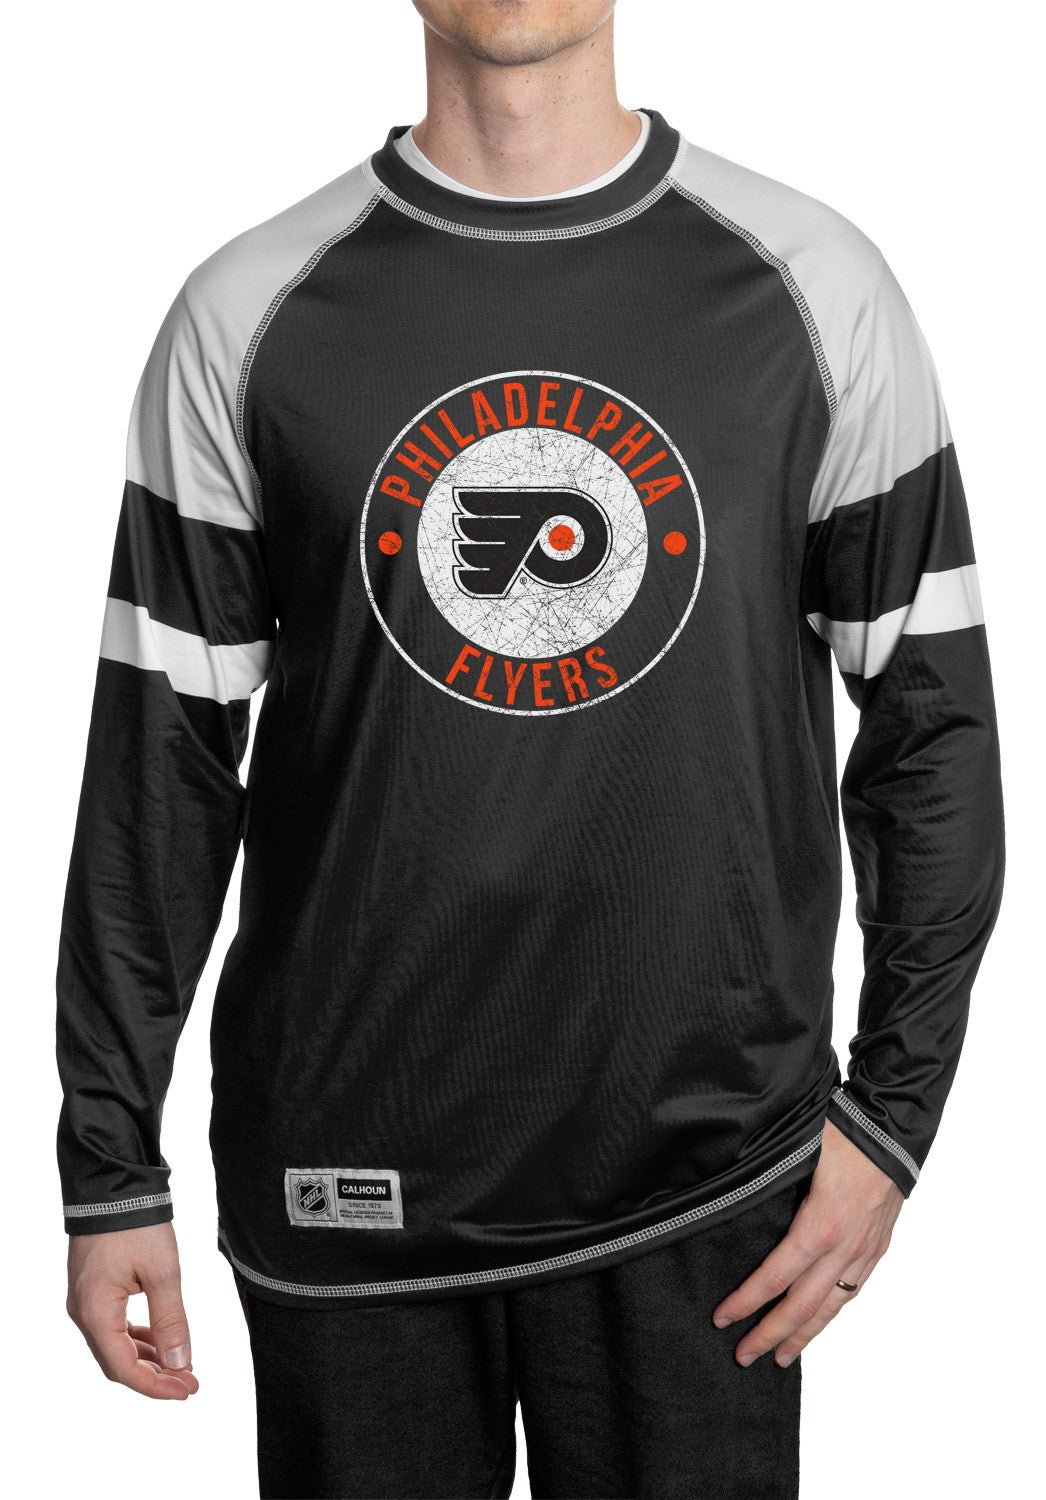 Philadelphia Flyers Thermal Long Sleeve Rash Guard Shirt